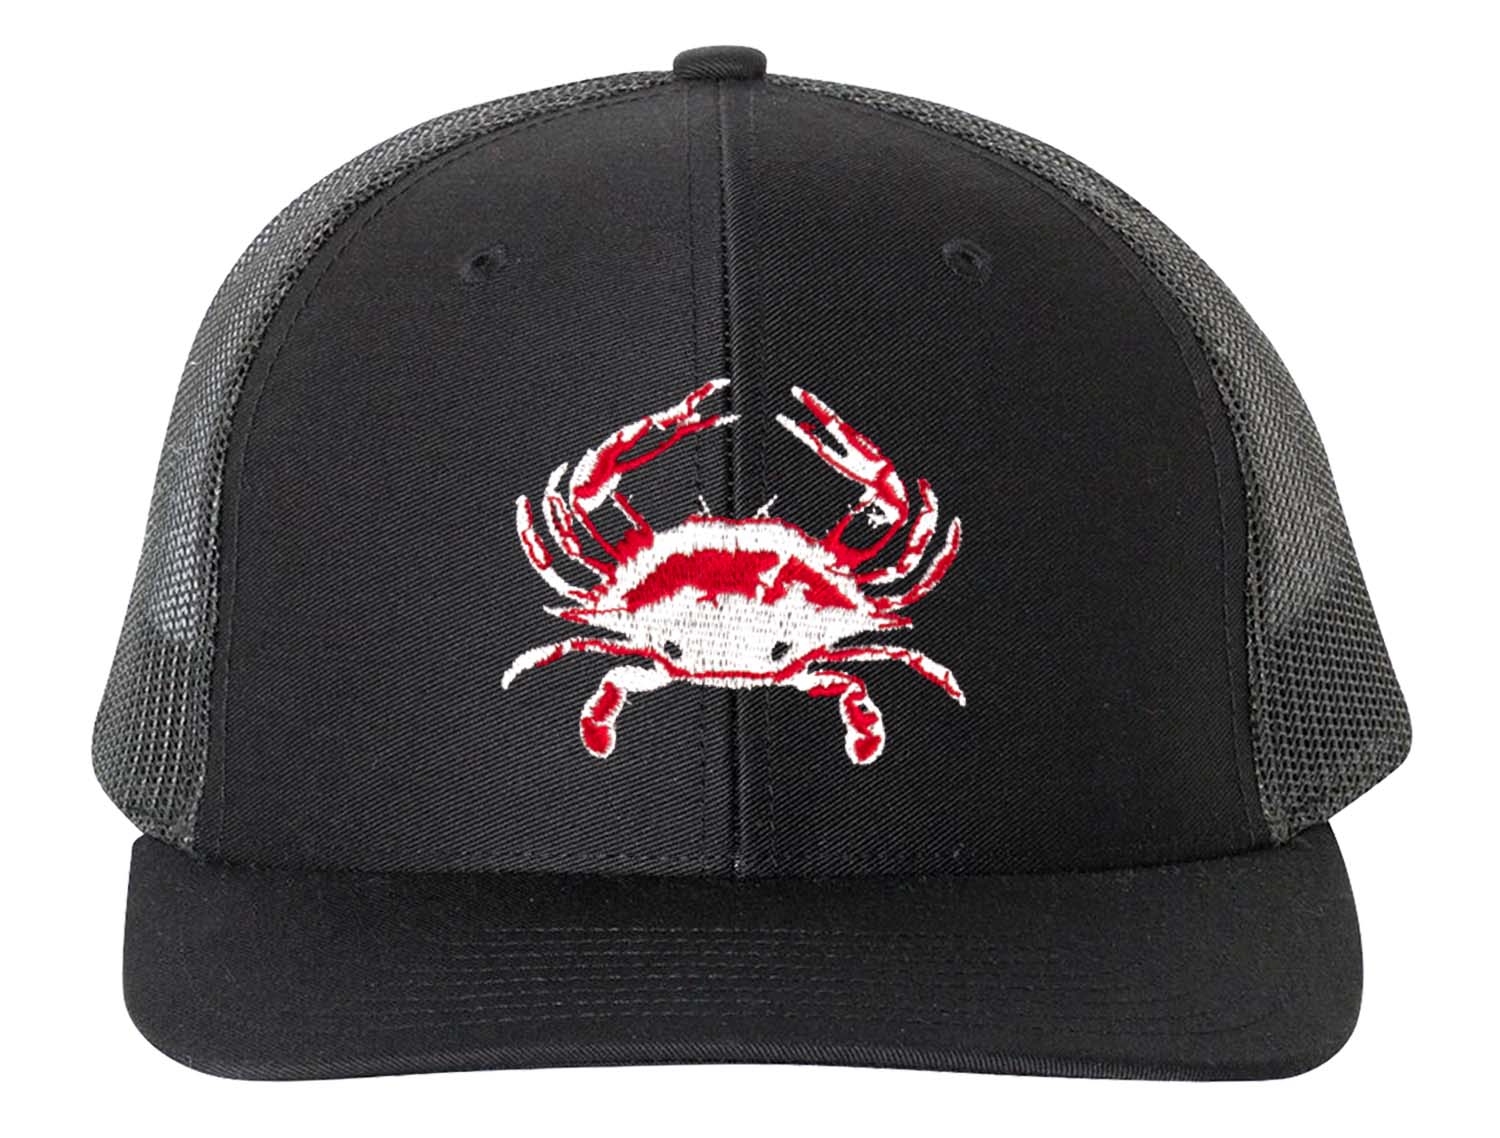 Blue Crab "Reel Crabby" Hat - Black/Black Mesh Structured Trucker Hat